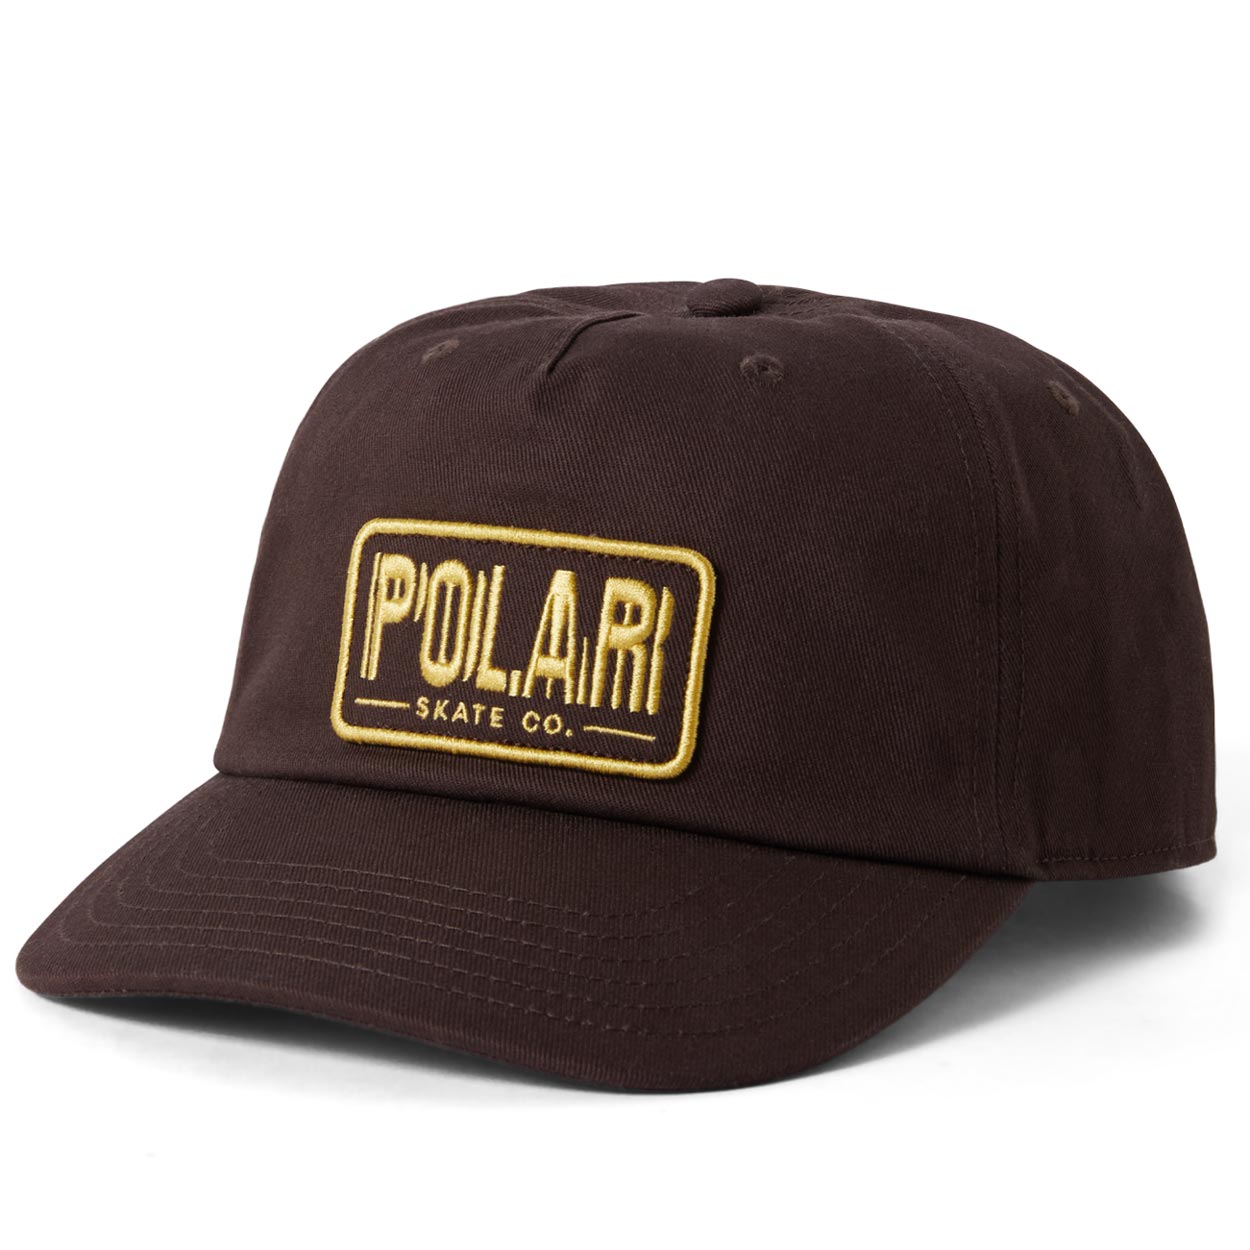 Polar Earthquake Patch Cap - Brown - Snapback Cap by Polar One Size